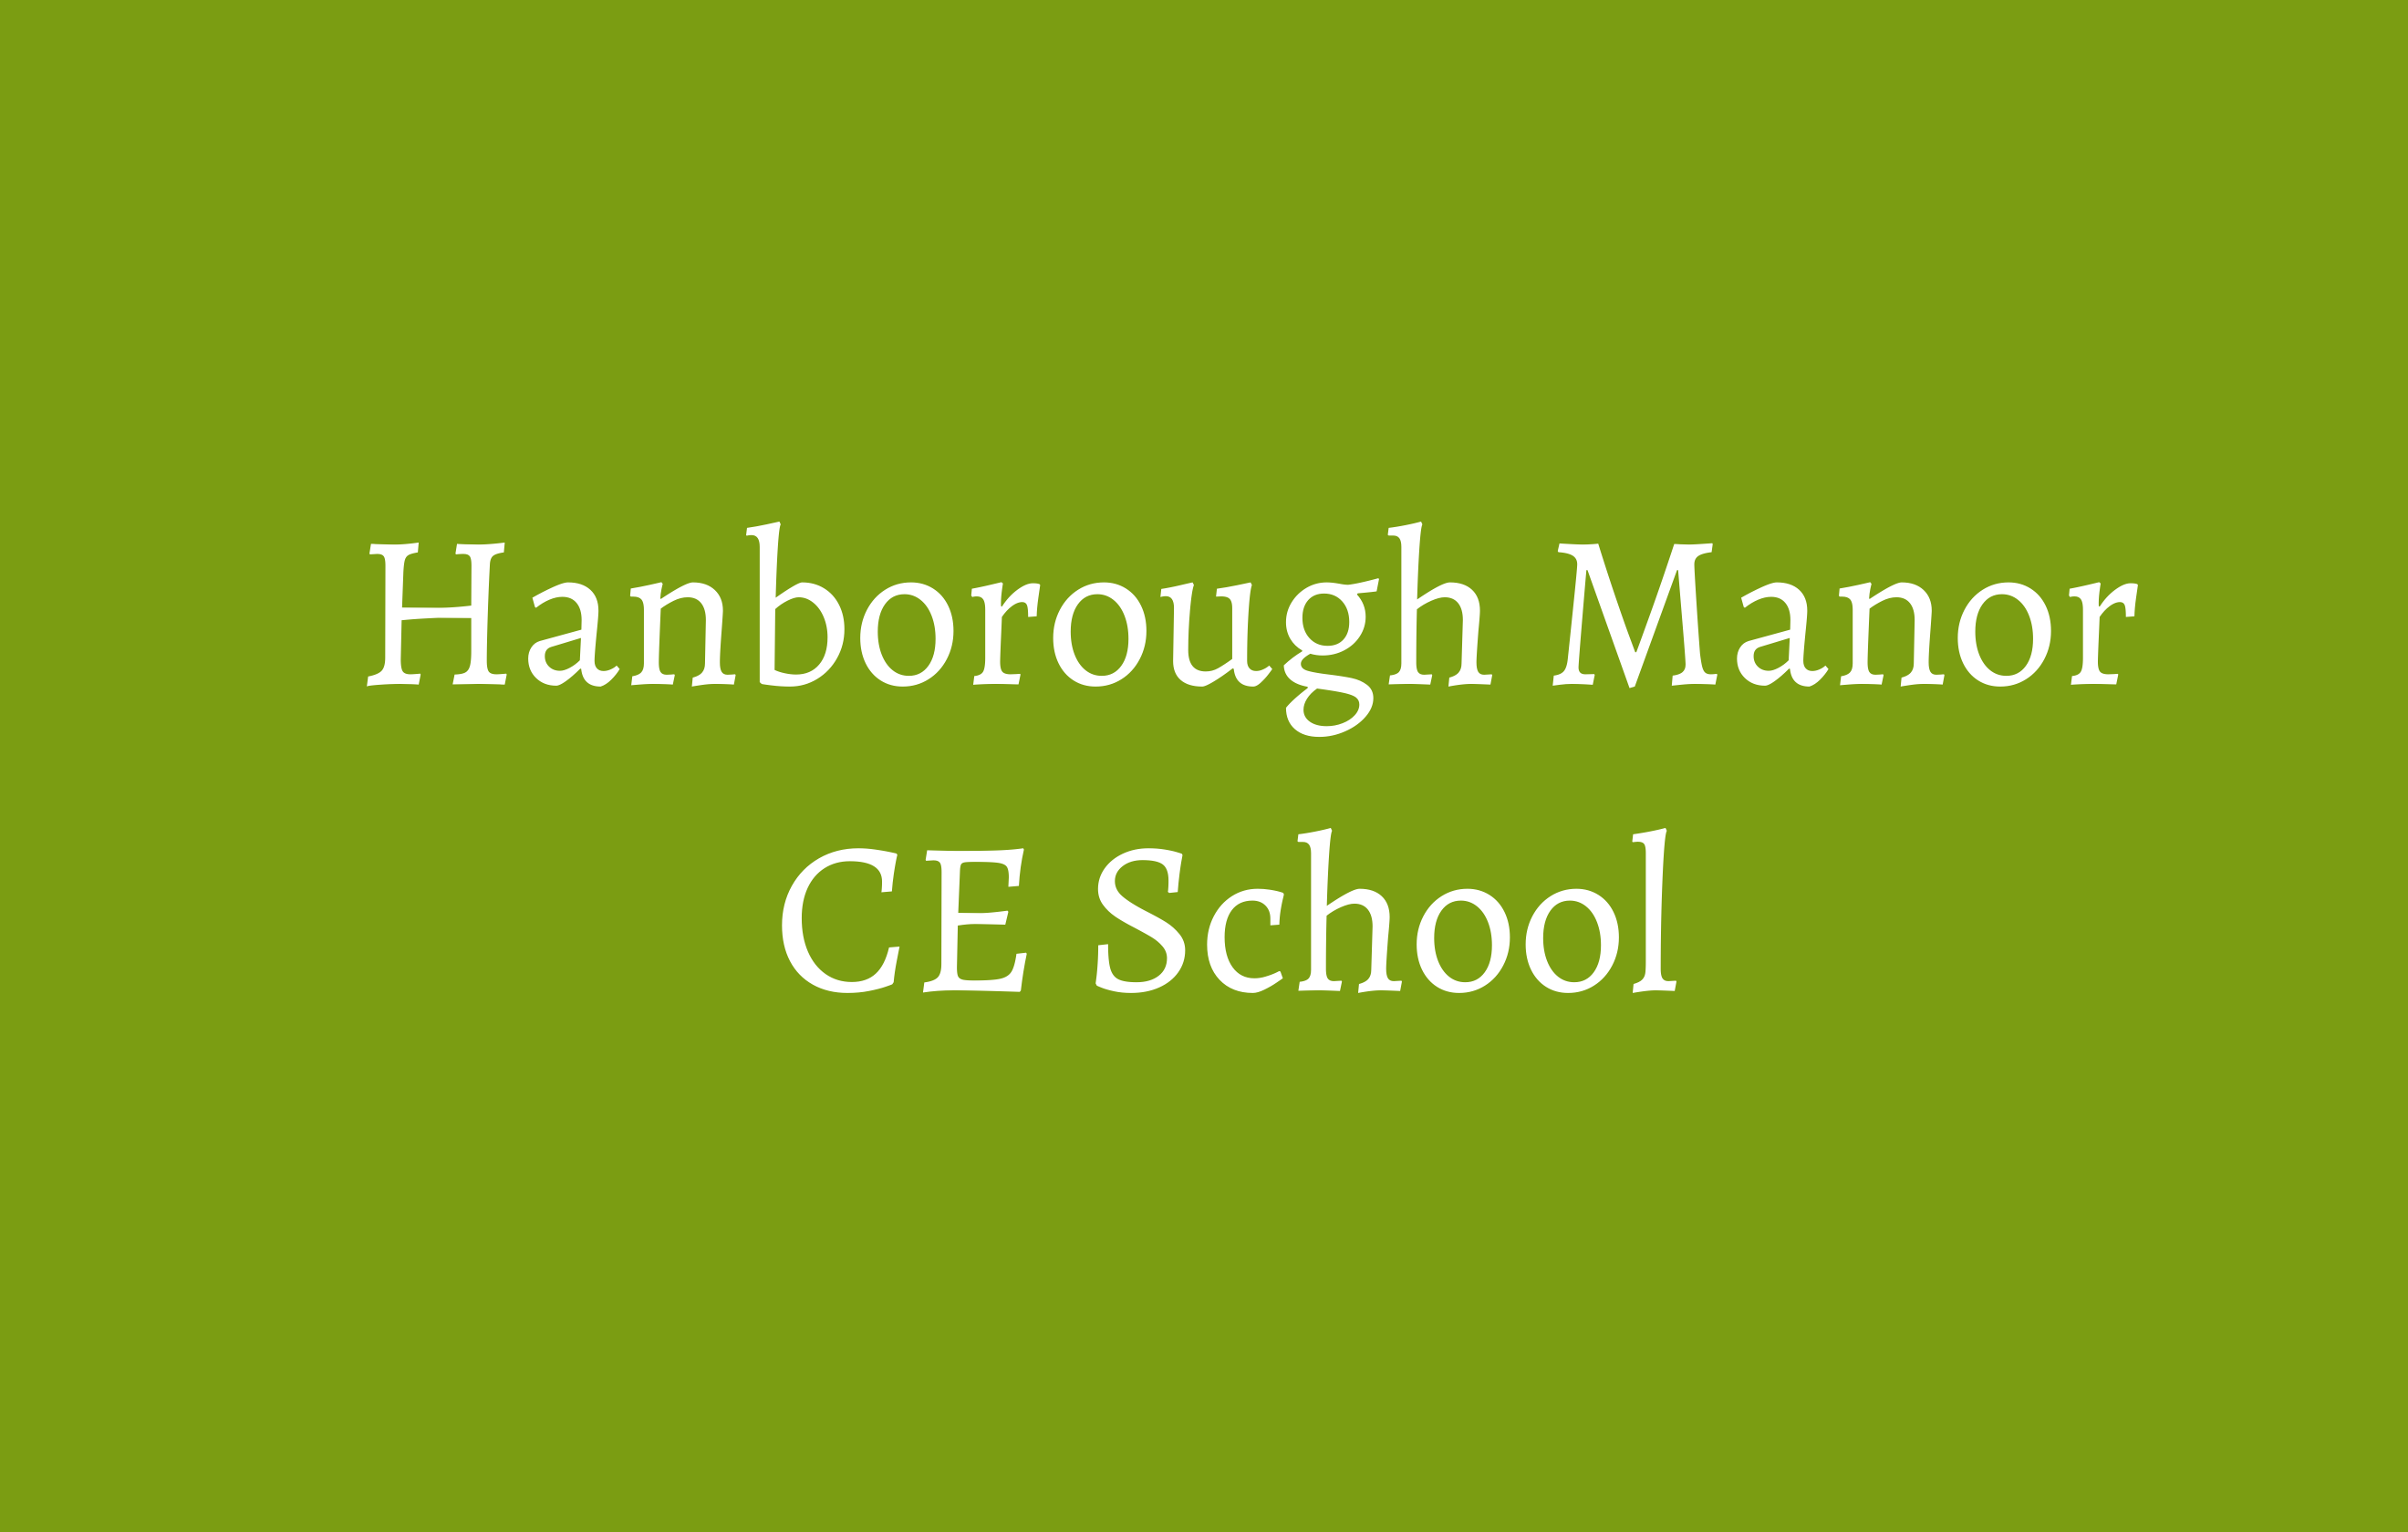 Hanborough Manor School Projects